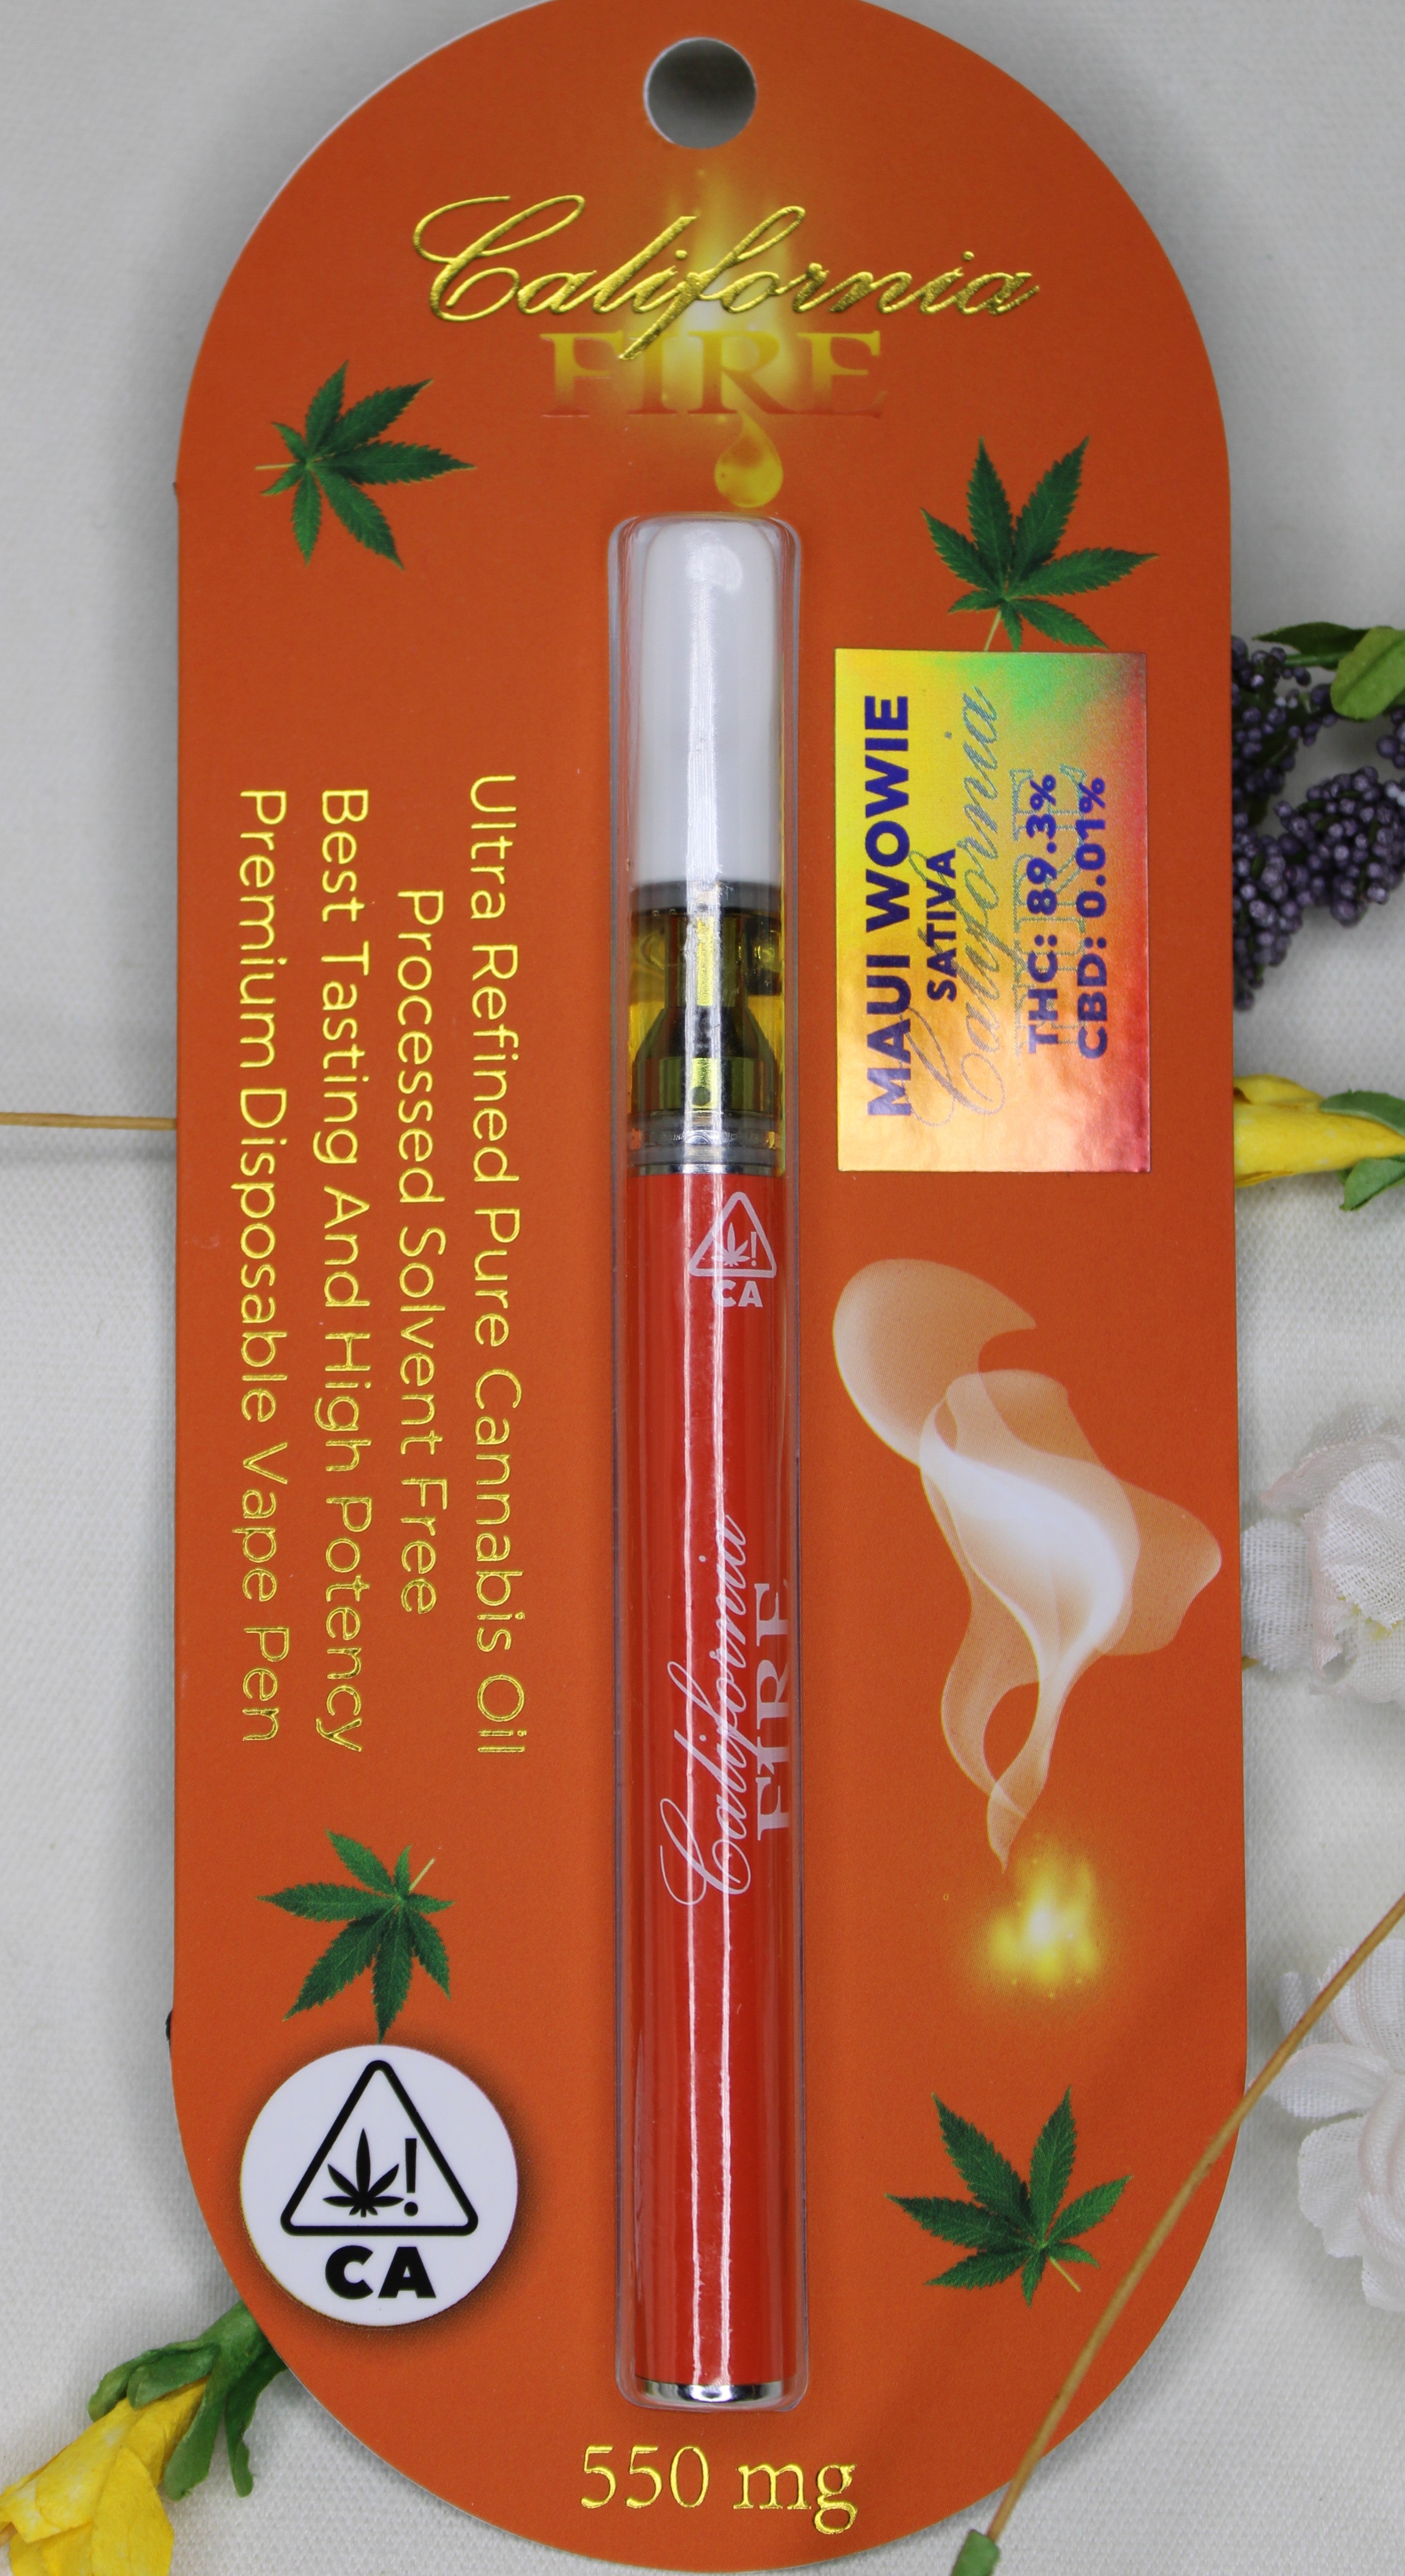 California Fire "Maui Wowie" Disposable Cartridges (550 mg)